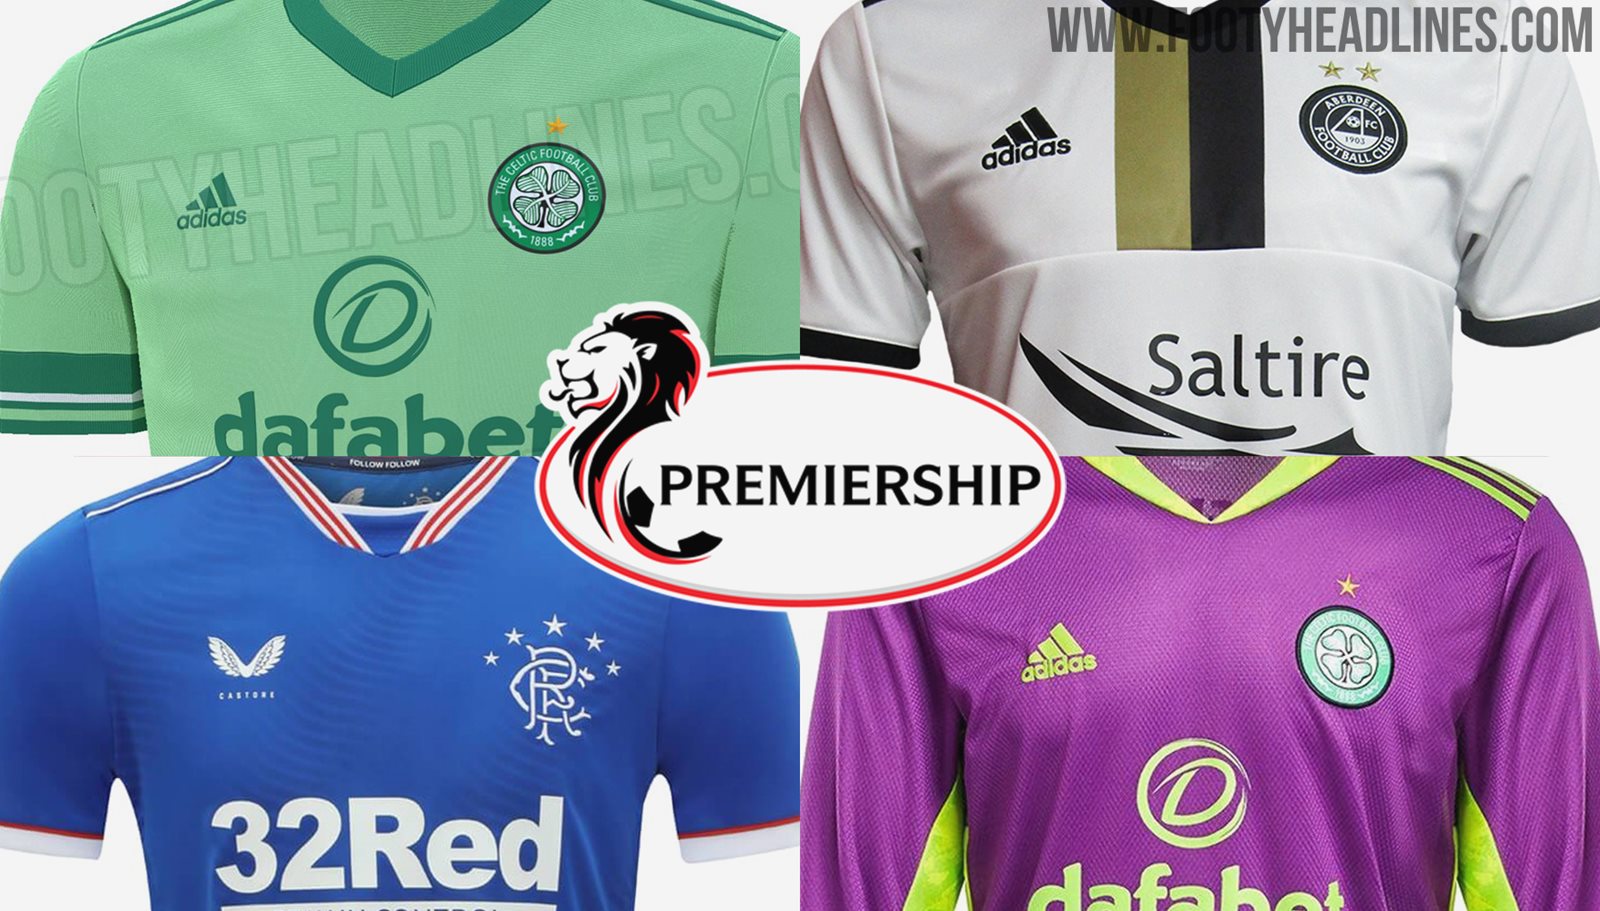 New Balance Celtic 2015-16 Away Kit Released - Footy Headlines